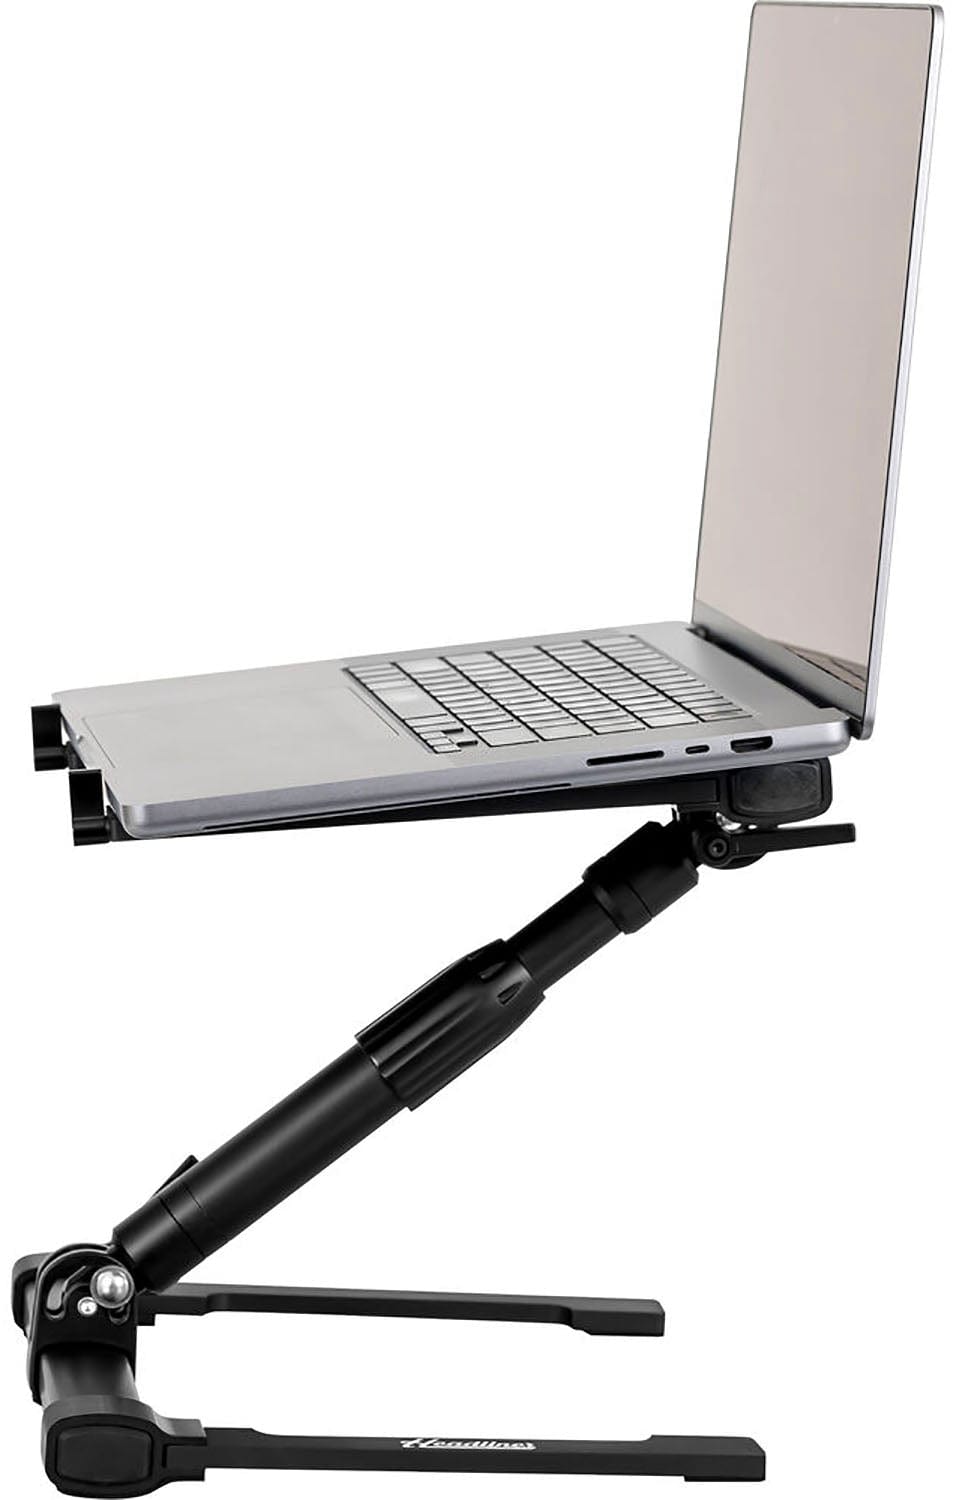 Headliner HL20015 Gigastand USB+ Laptop Stand - PSSL ProSound and Stage Lighting